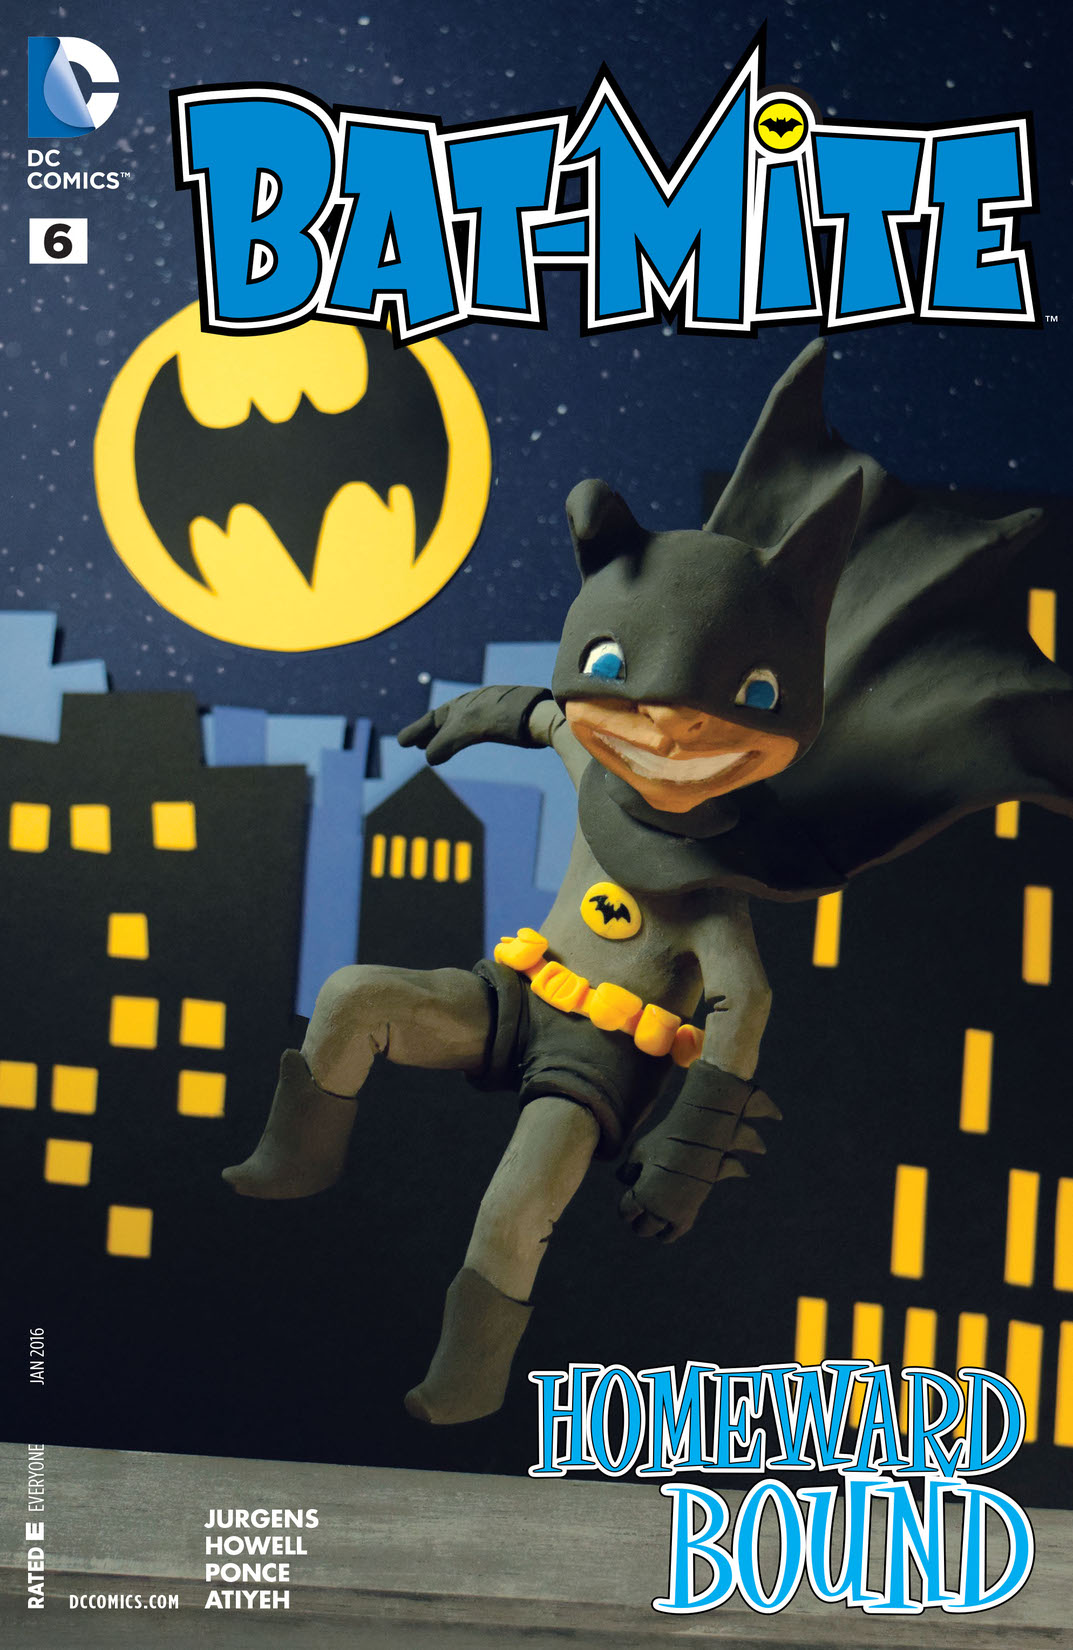 Bat-Mite #6 preview images